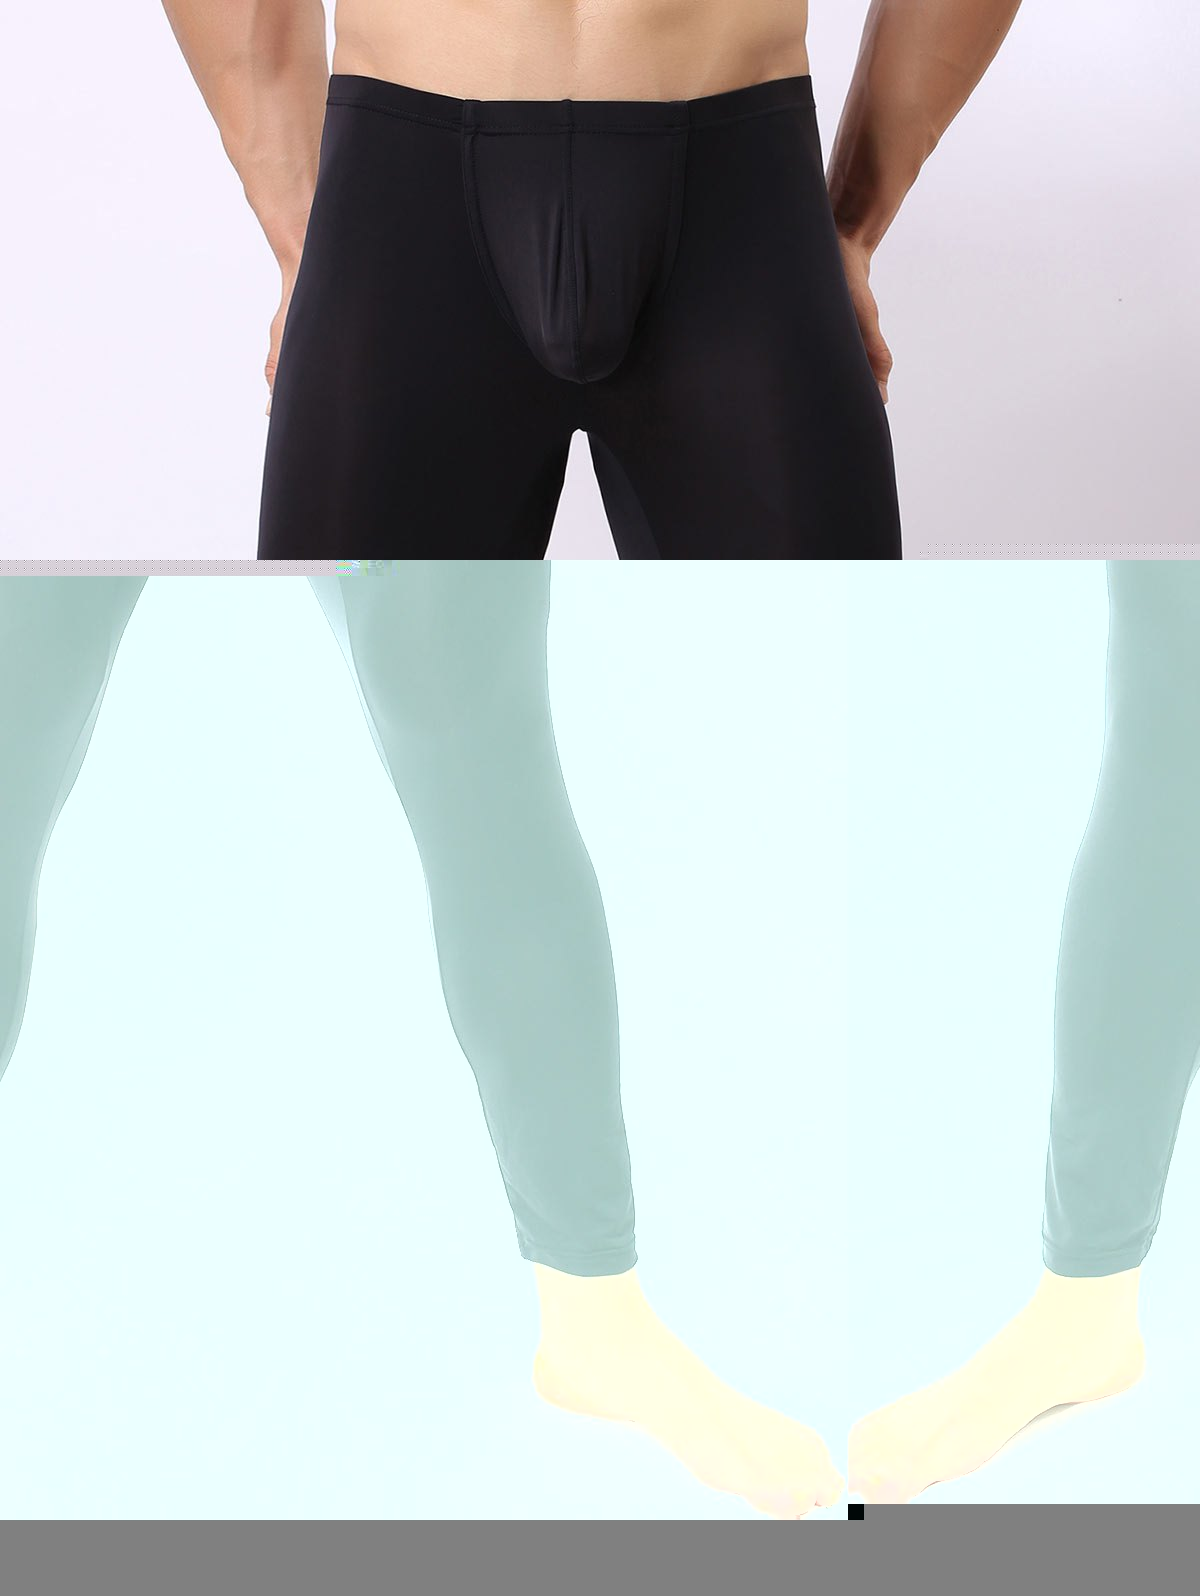 Pantalon Long Grande Flexibilité avec Poche en U Saillante - Noir S